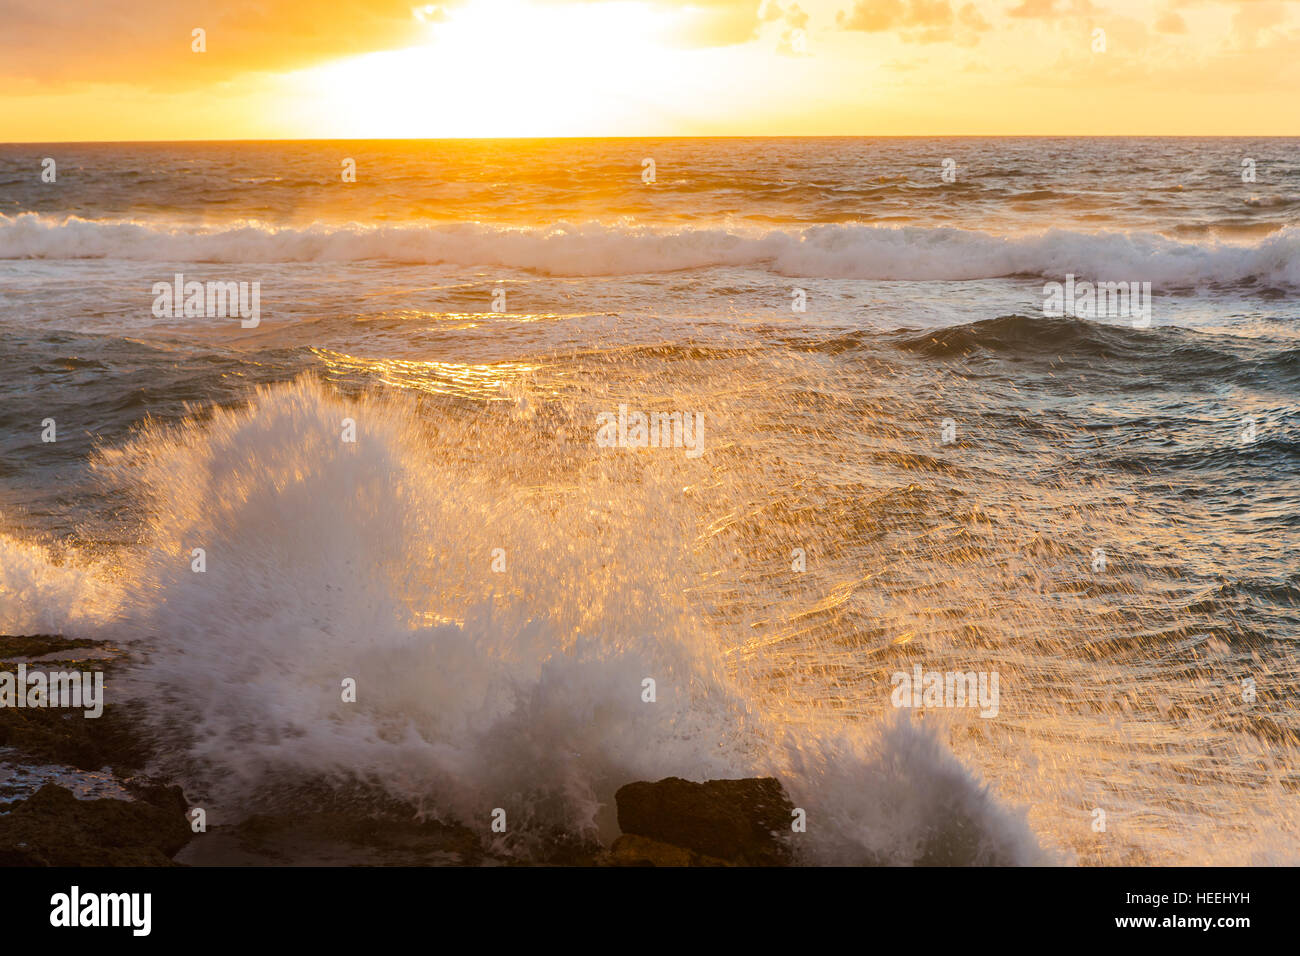 Sunset over ocean, Atlantic ocean shore, Cape Spartel near Tangier, Morocco Stock Photo